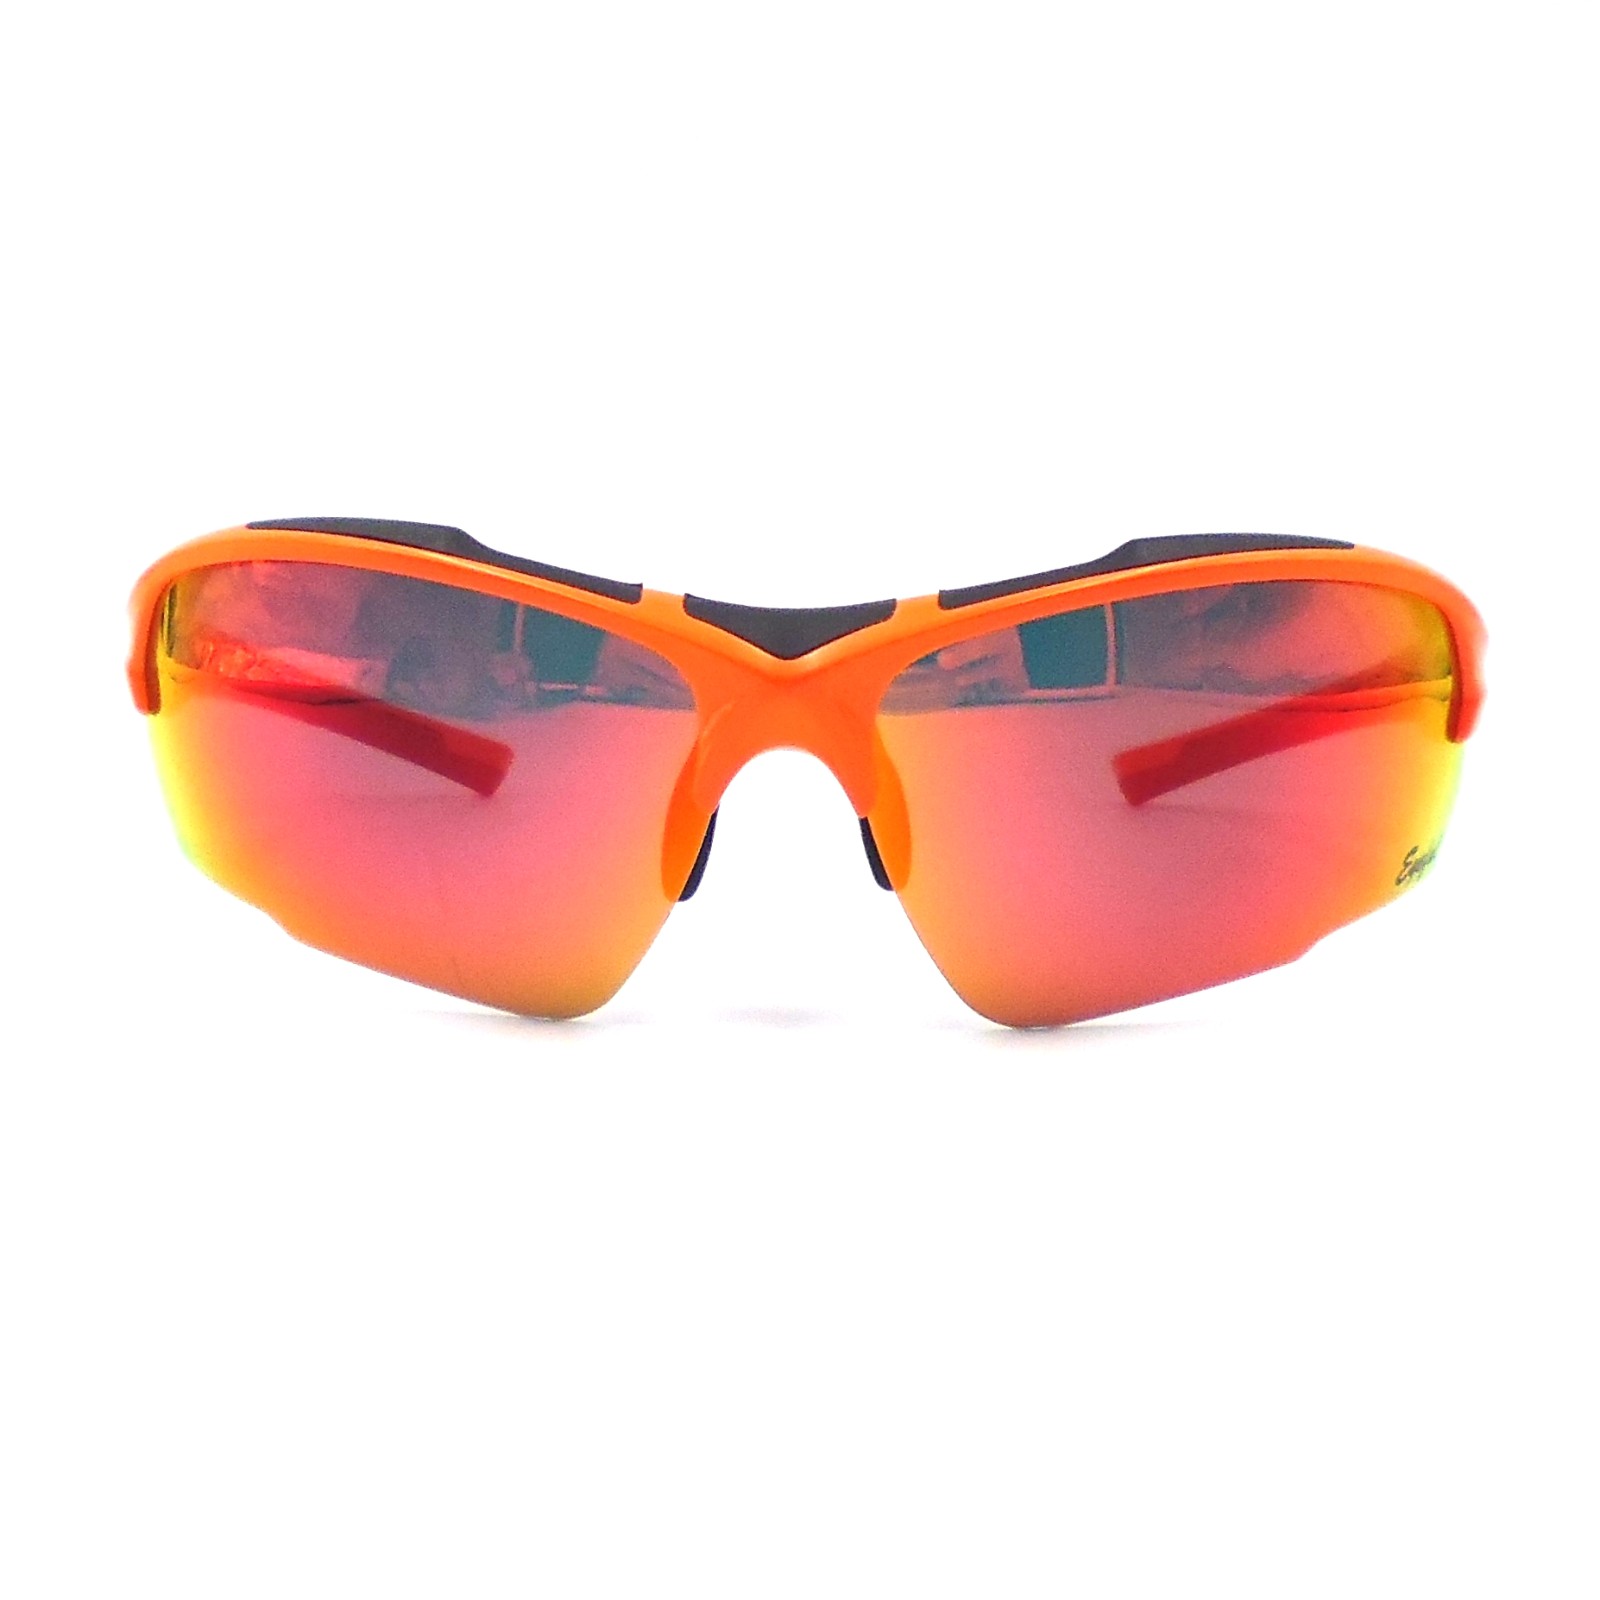 EF002 運動休閒眼鏡, 太陽眼鏡